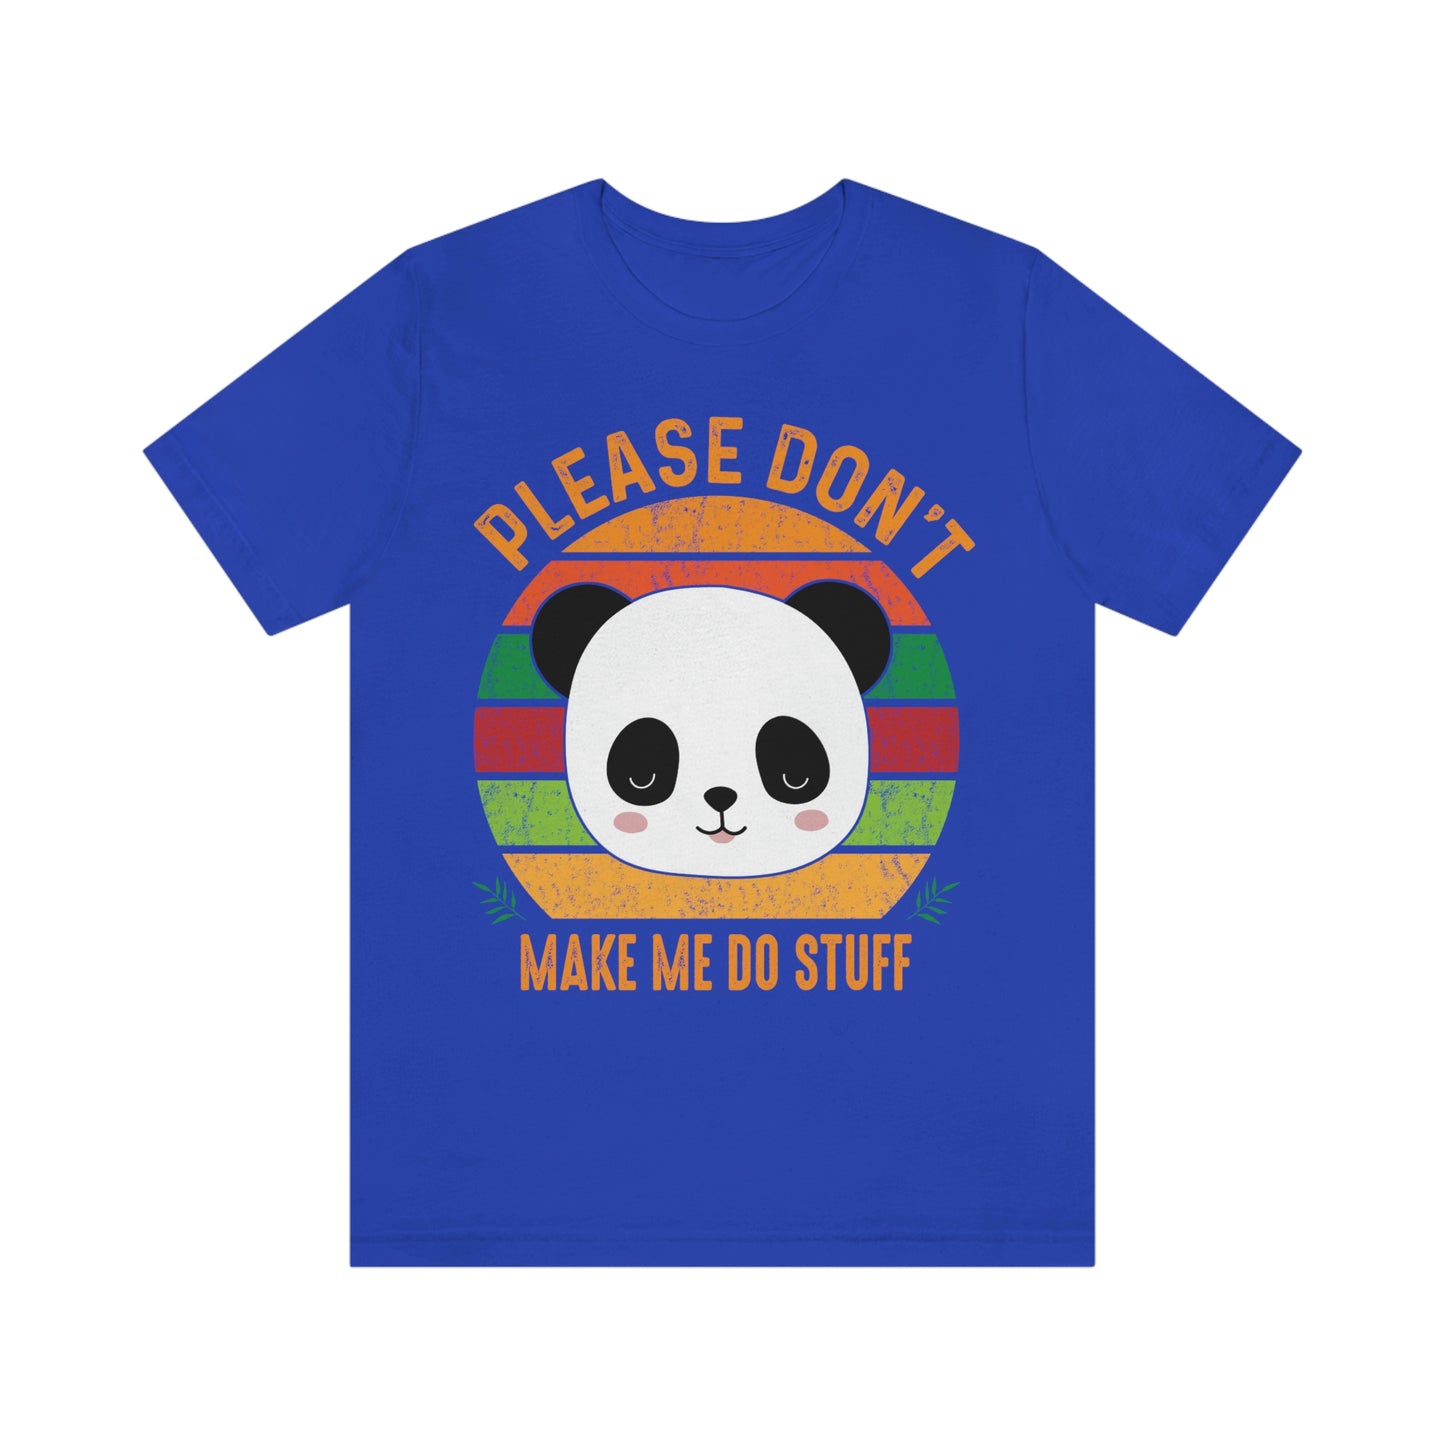 Panda - Unisex T-Shirt